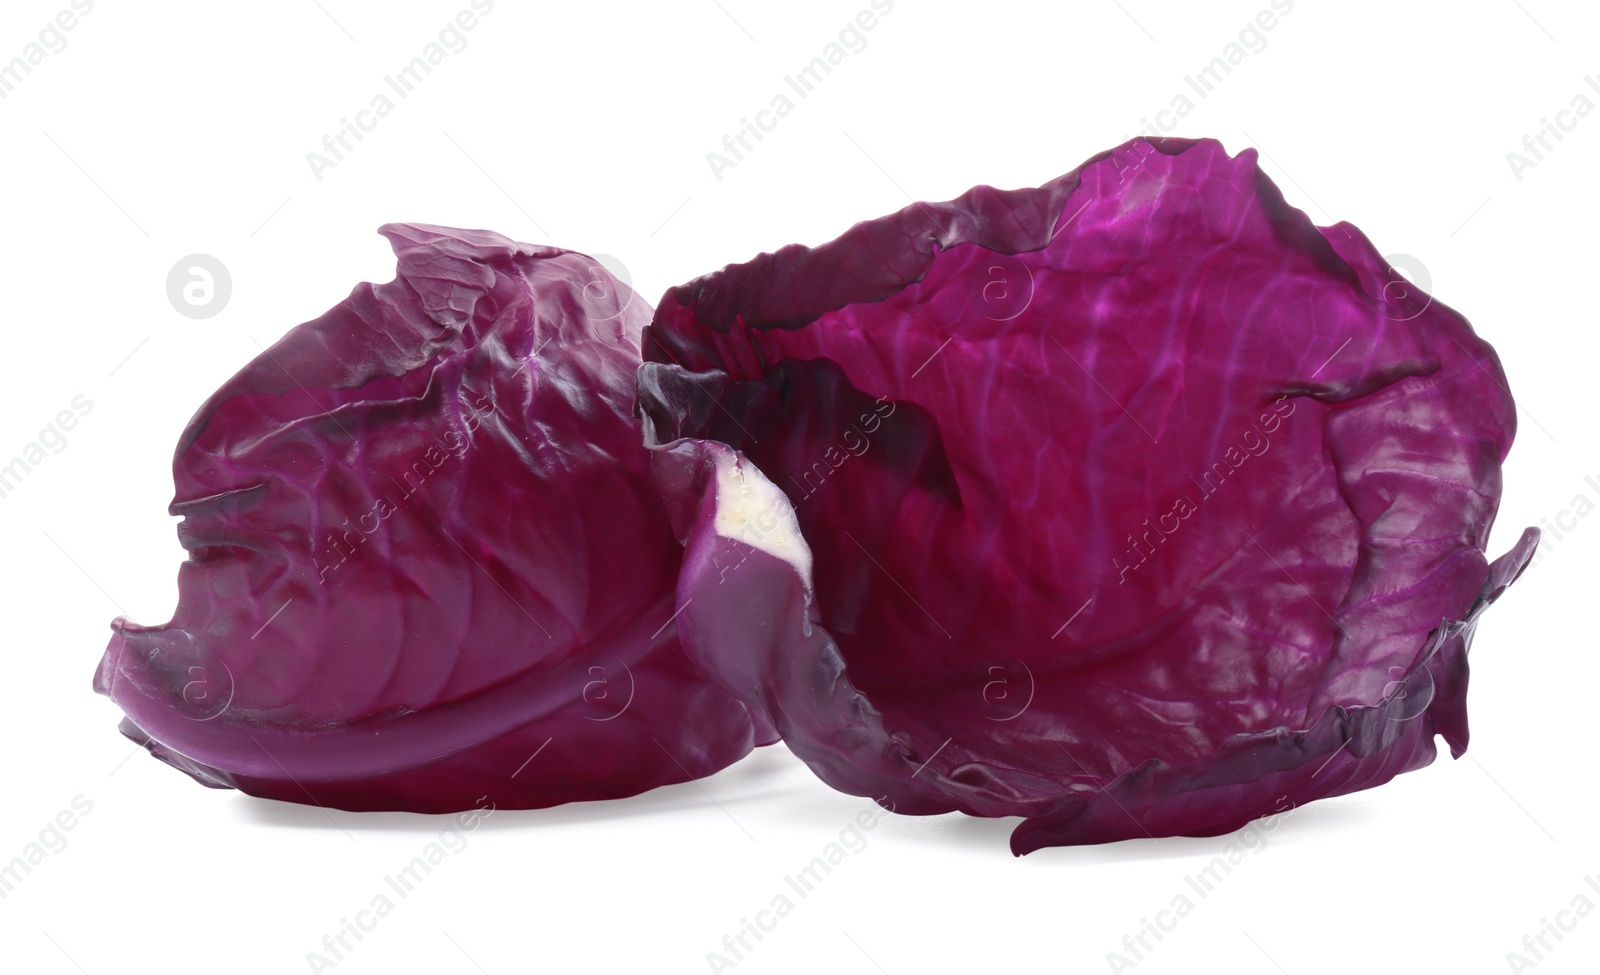 Photo of Two radicchio cabbage leaves on white background